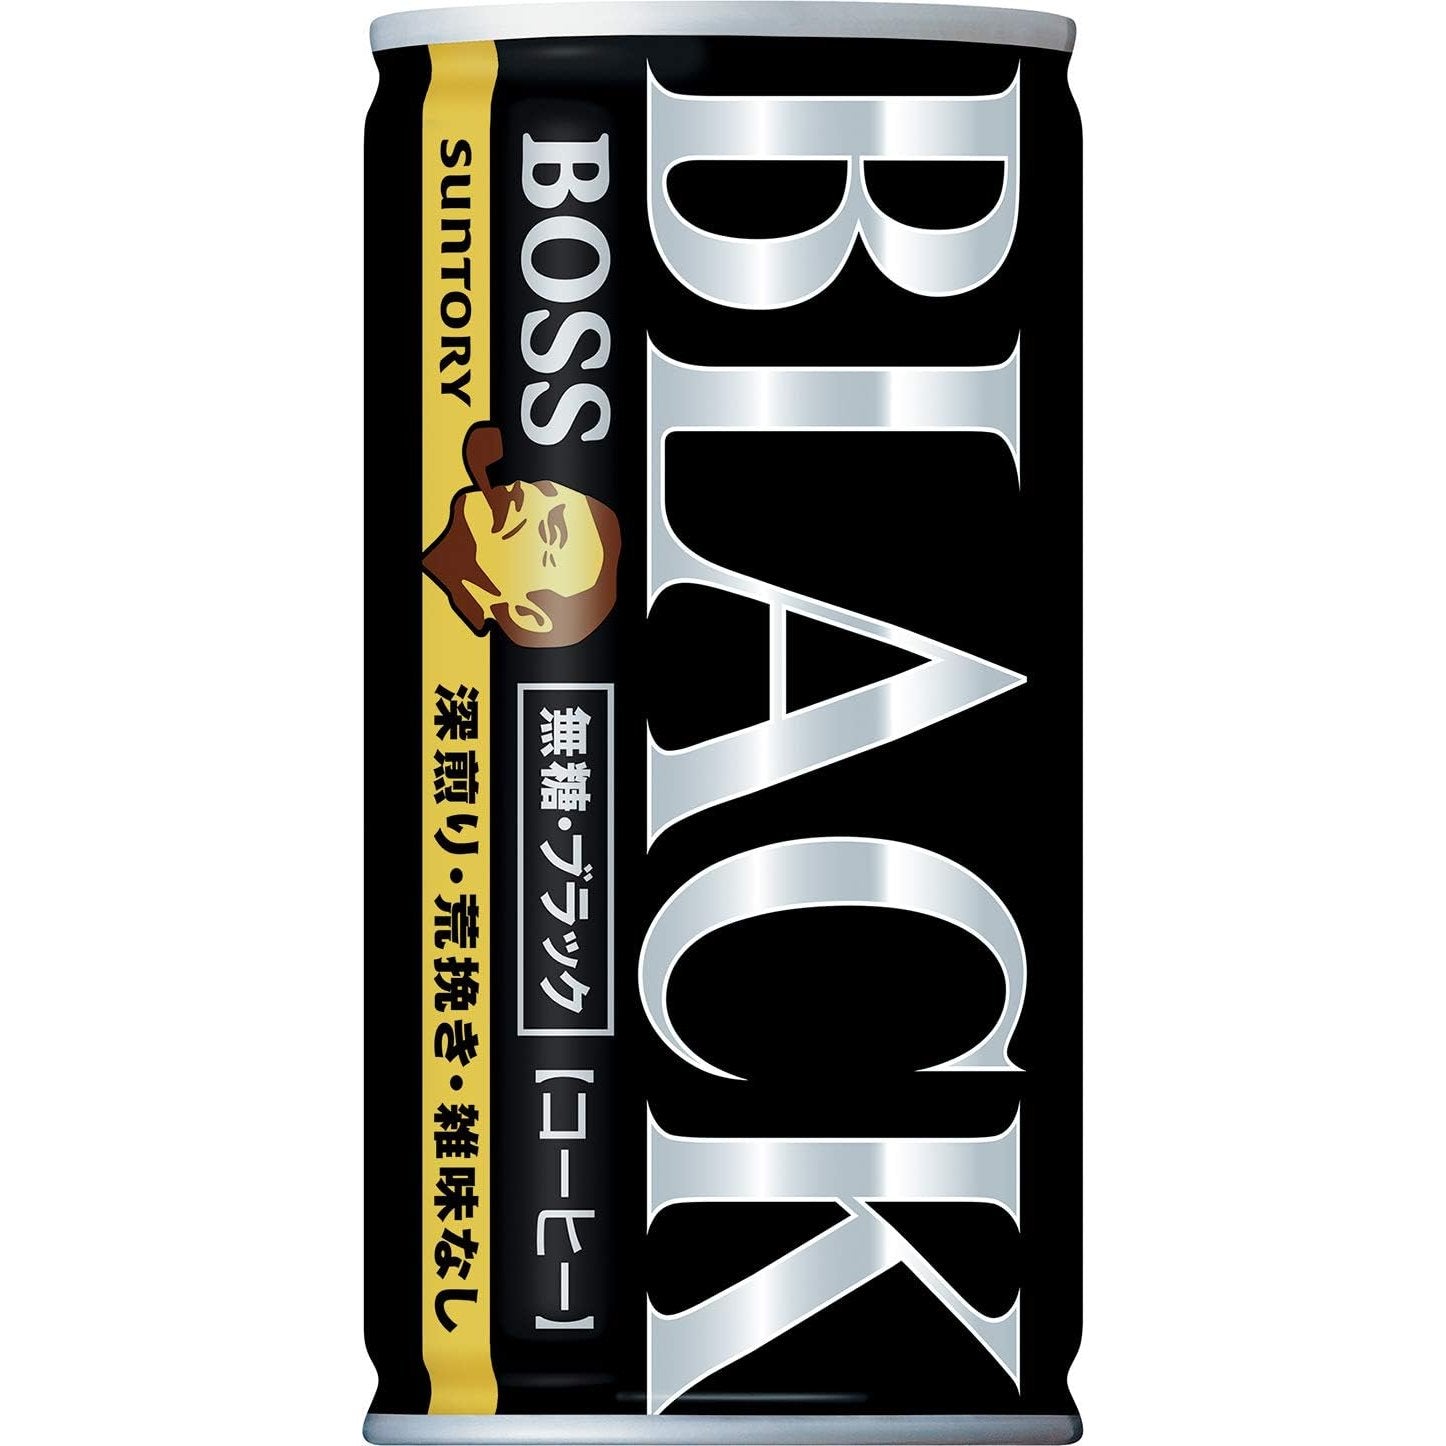 Suntory Boss Black Sugar Free Canned Coffee (Pack of 30)